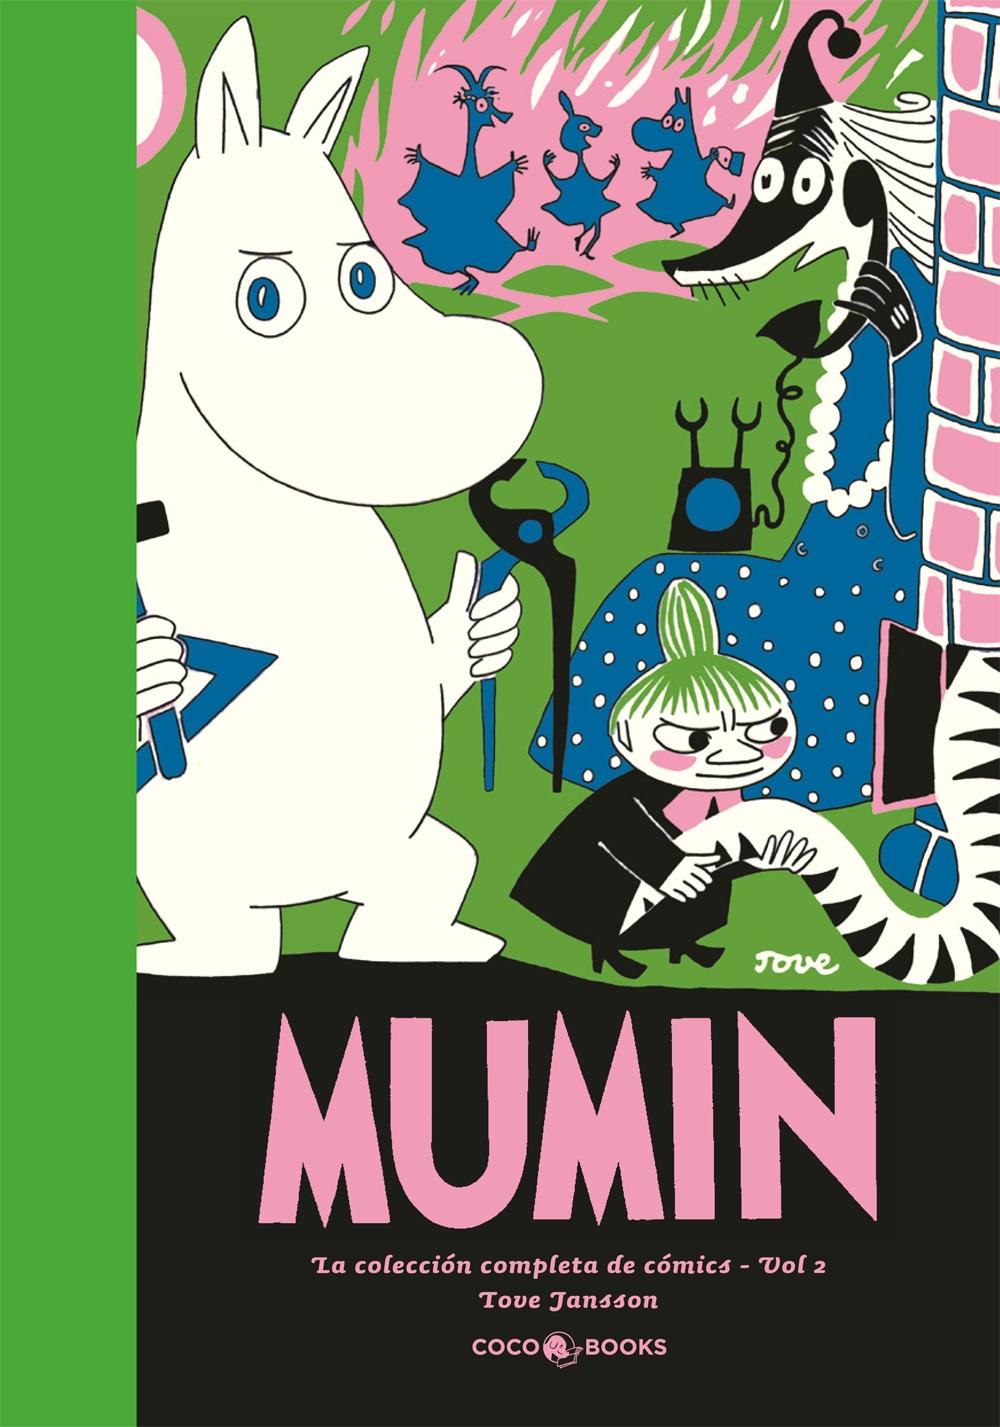 Mumin "La Colección Completa de Cómics - Vol. 2"